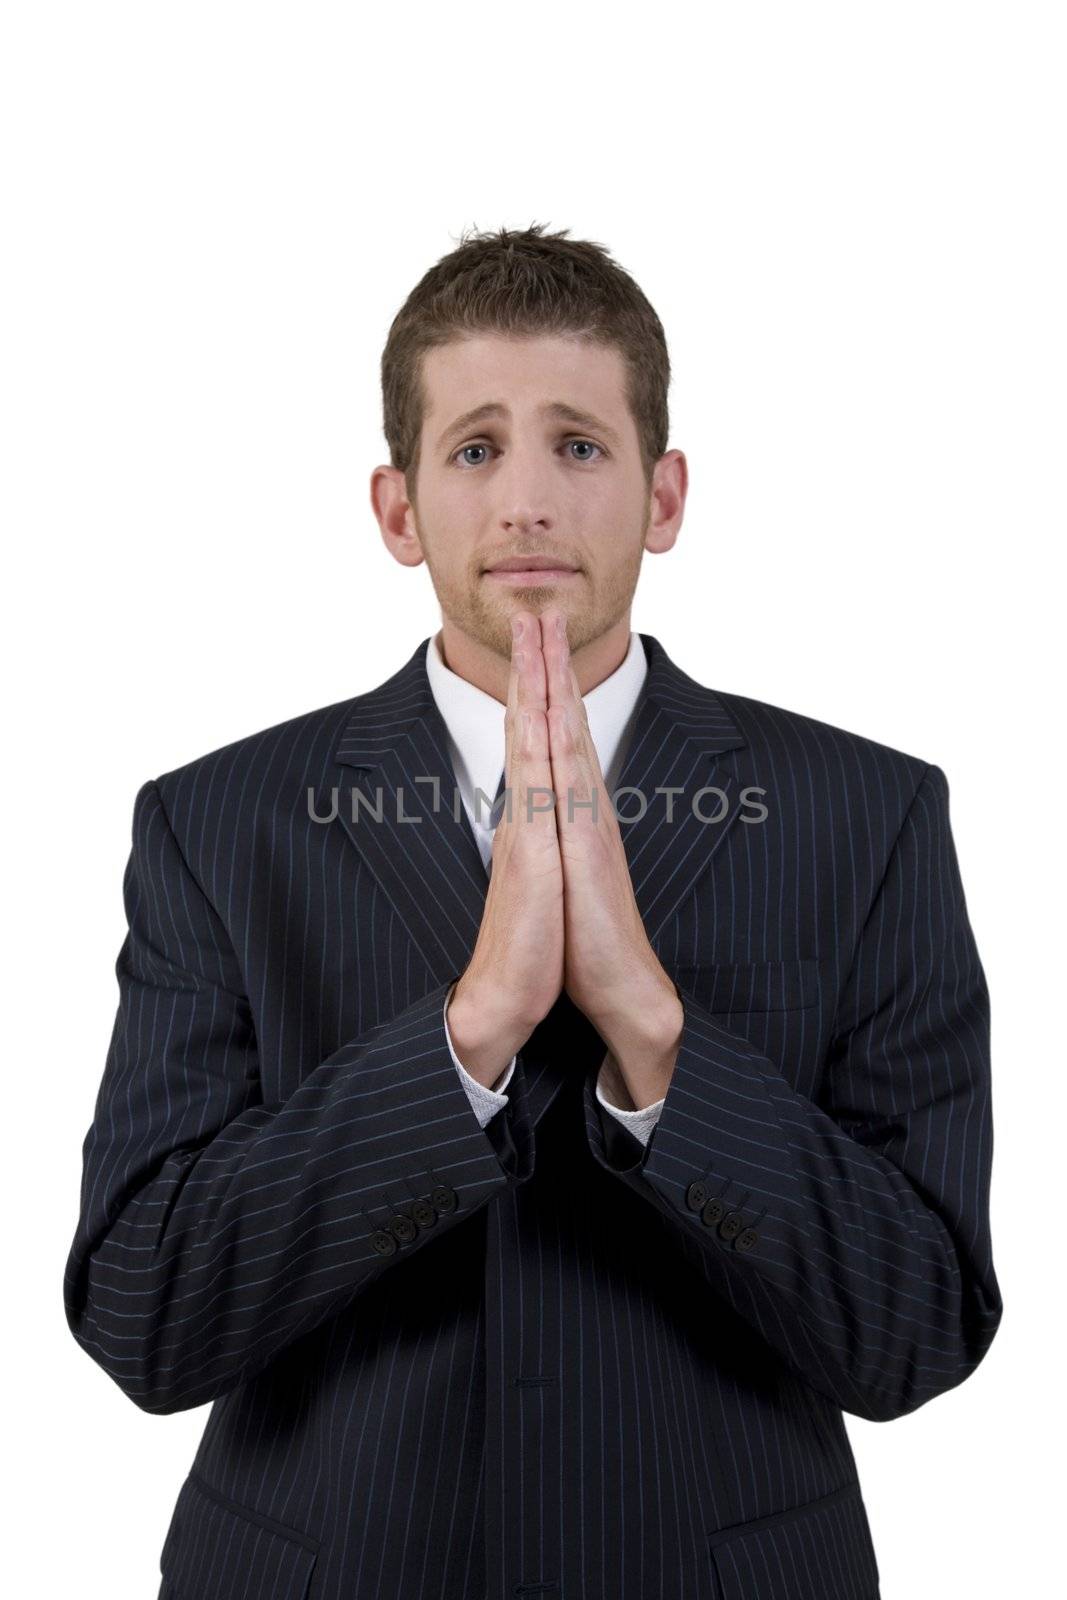 praying man on isolated background